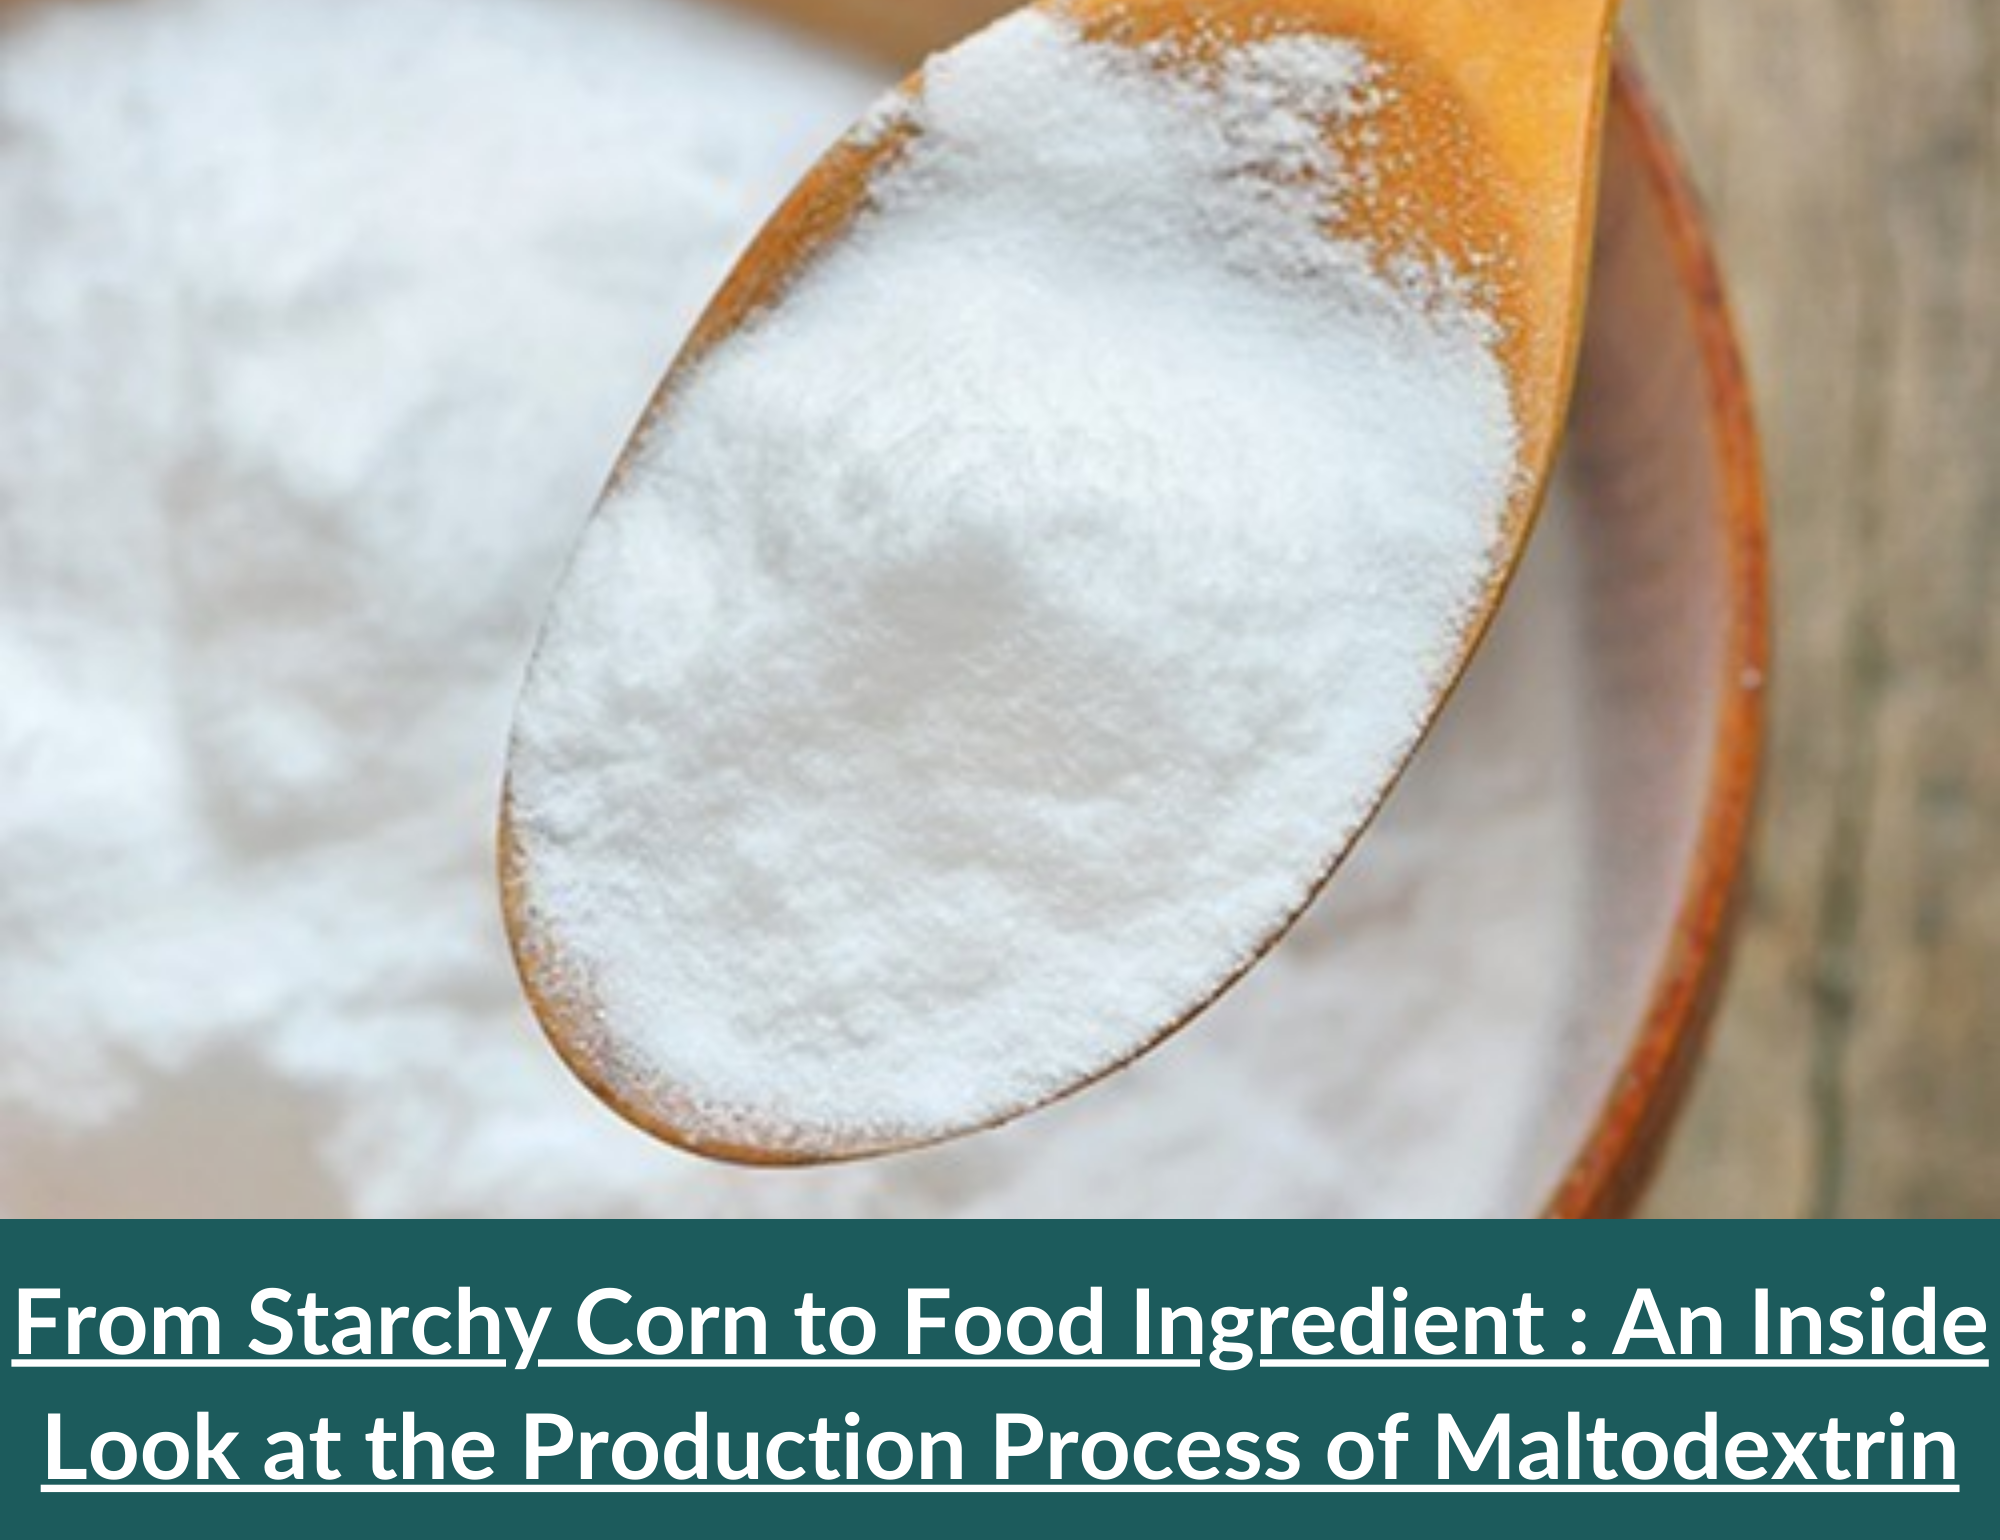 Production Process of Maltodextrin